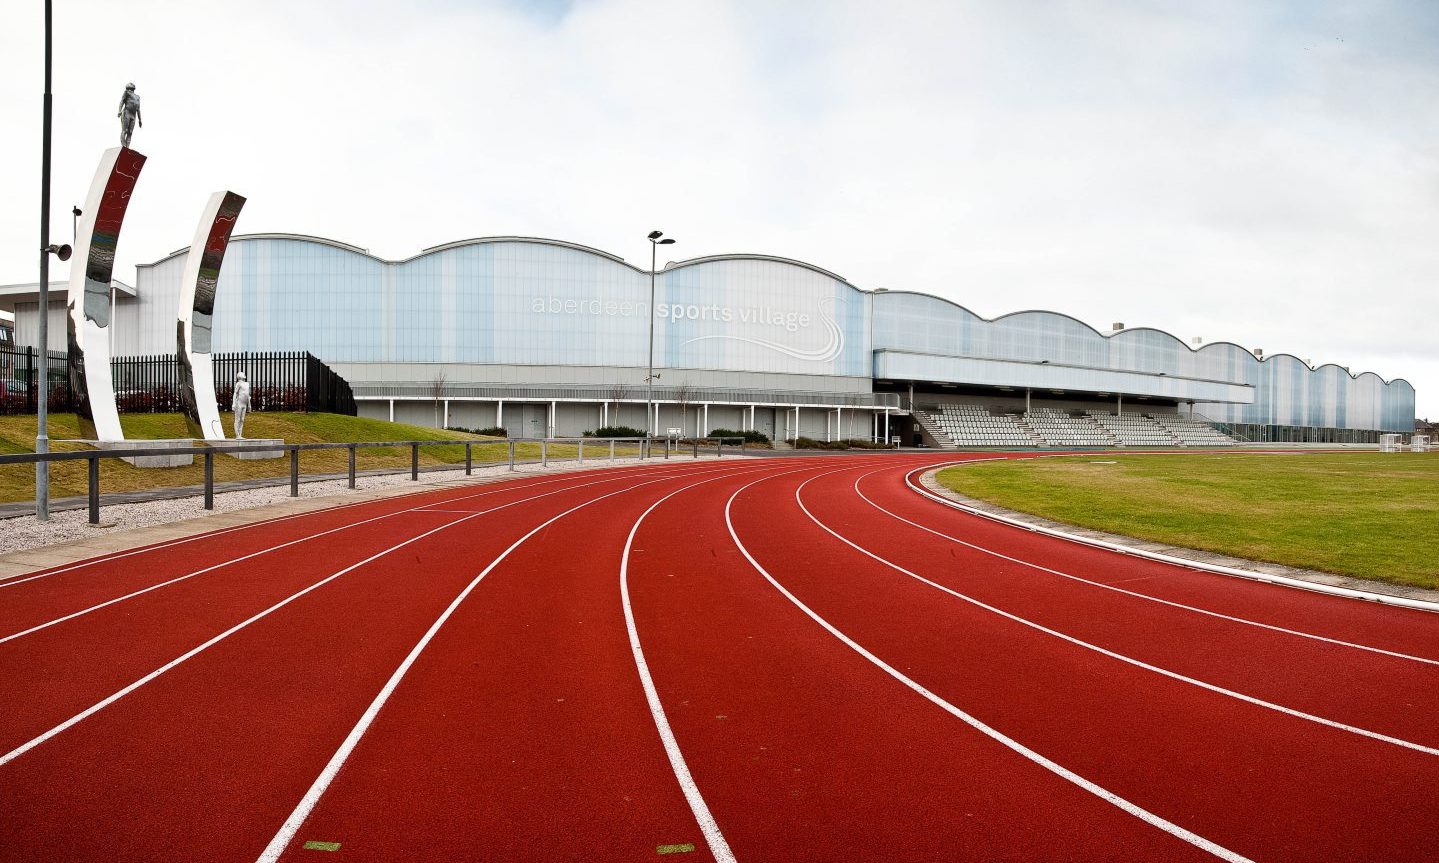 The running track at Aberdeen Sports Village